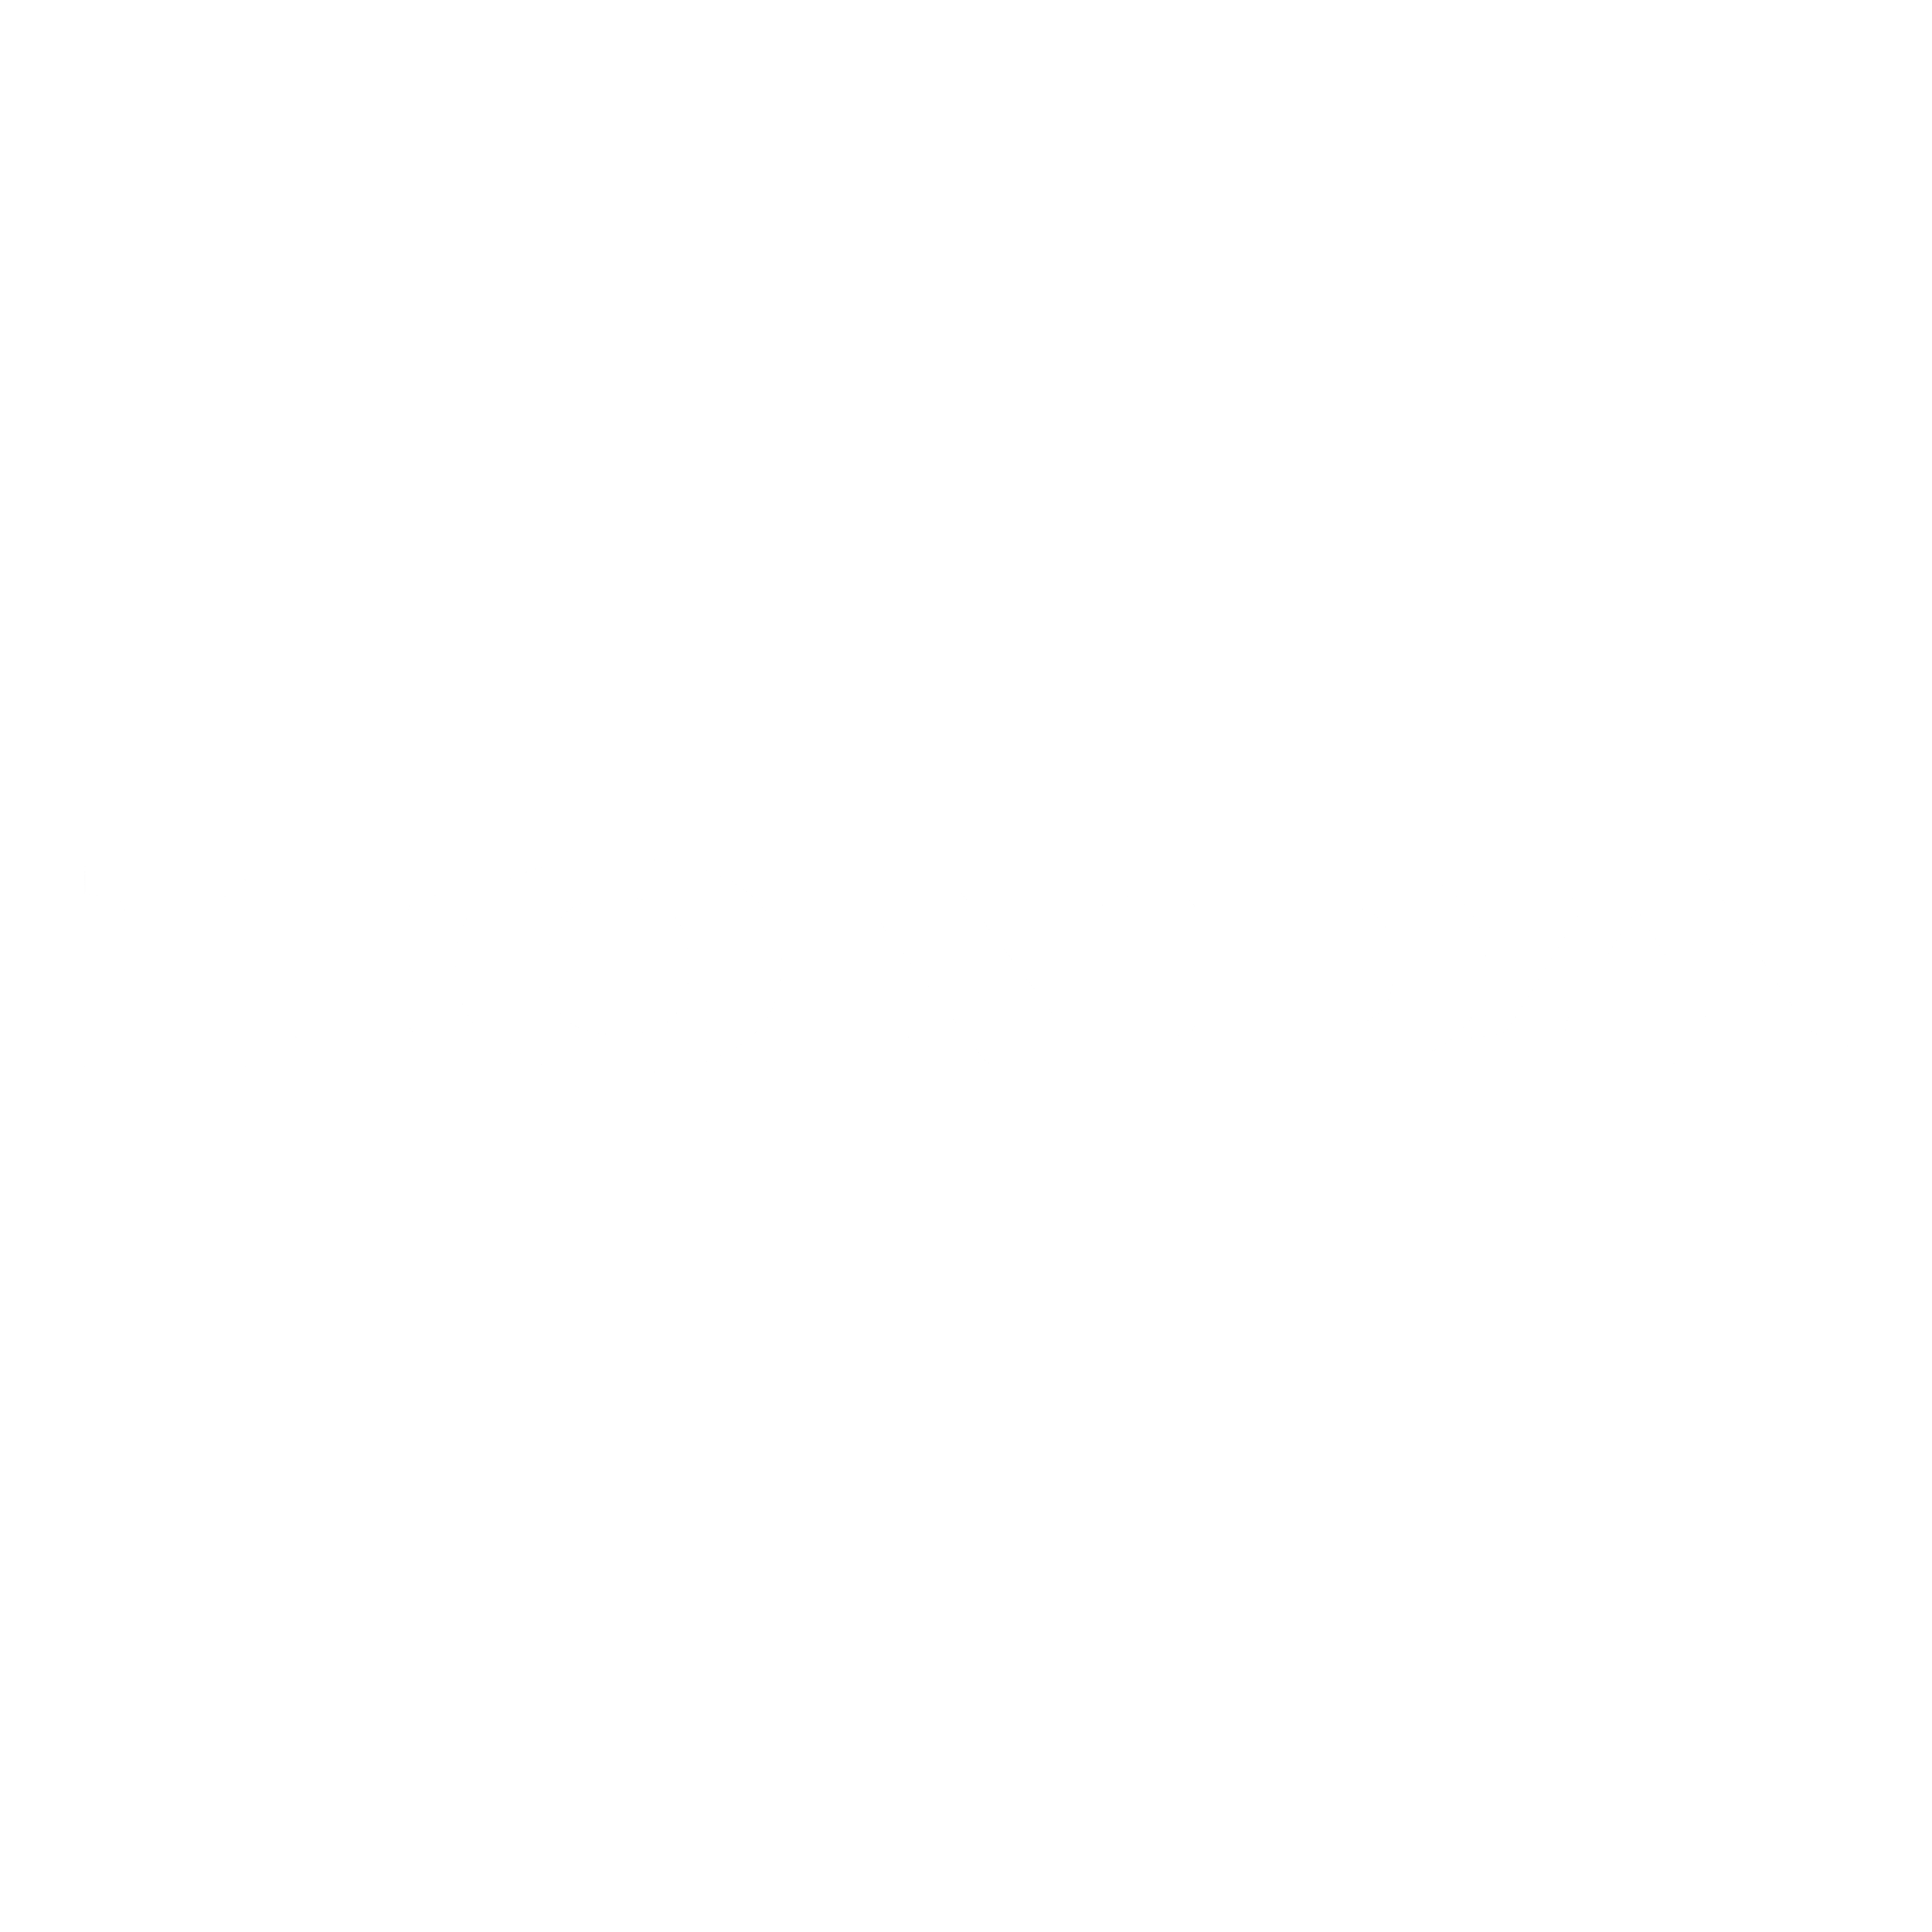 Honda Symbol PNG Pic Background